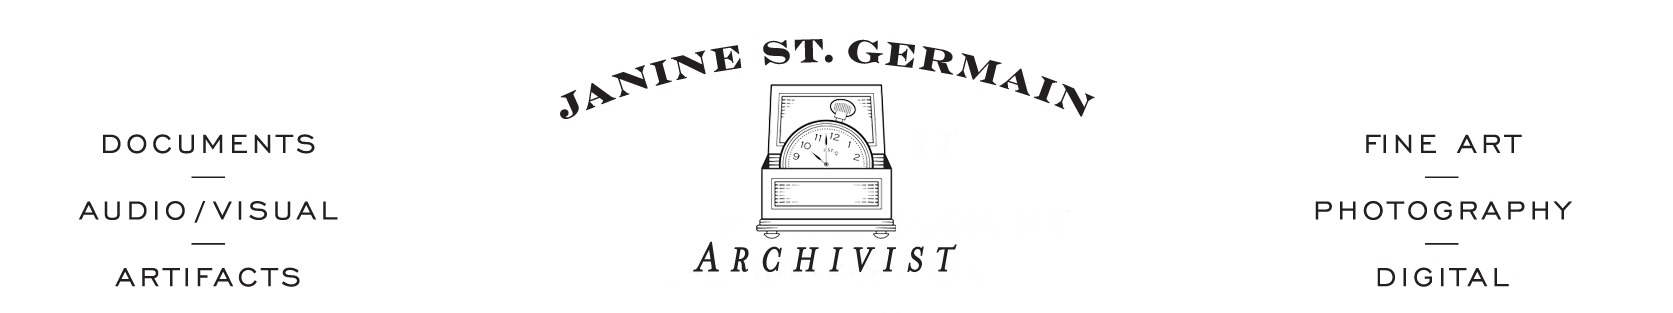 Janine St. Germain Archivist